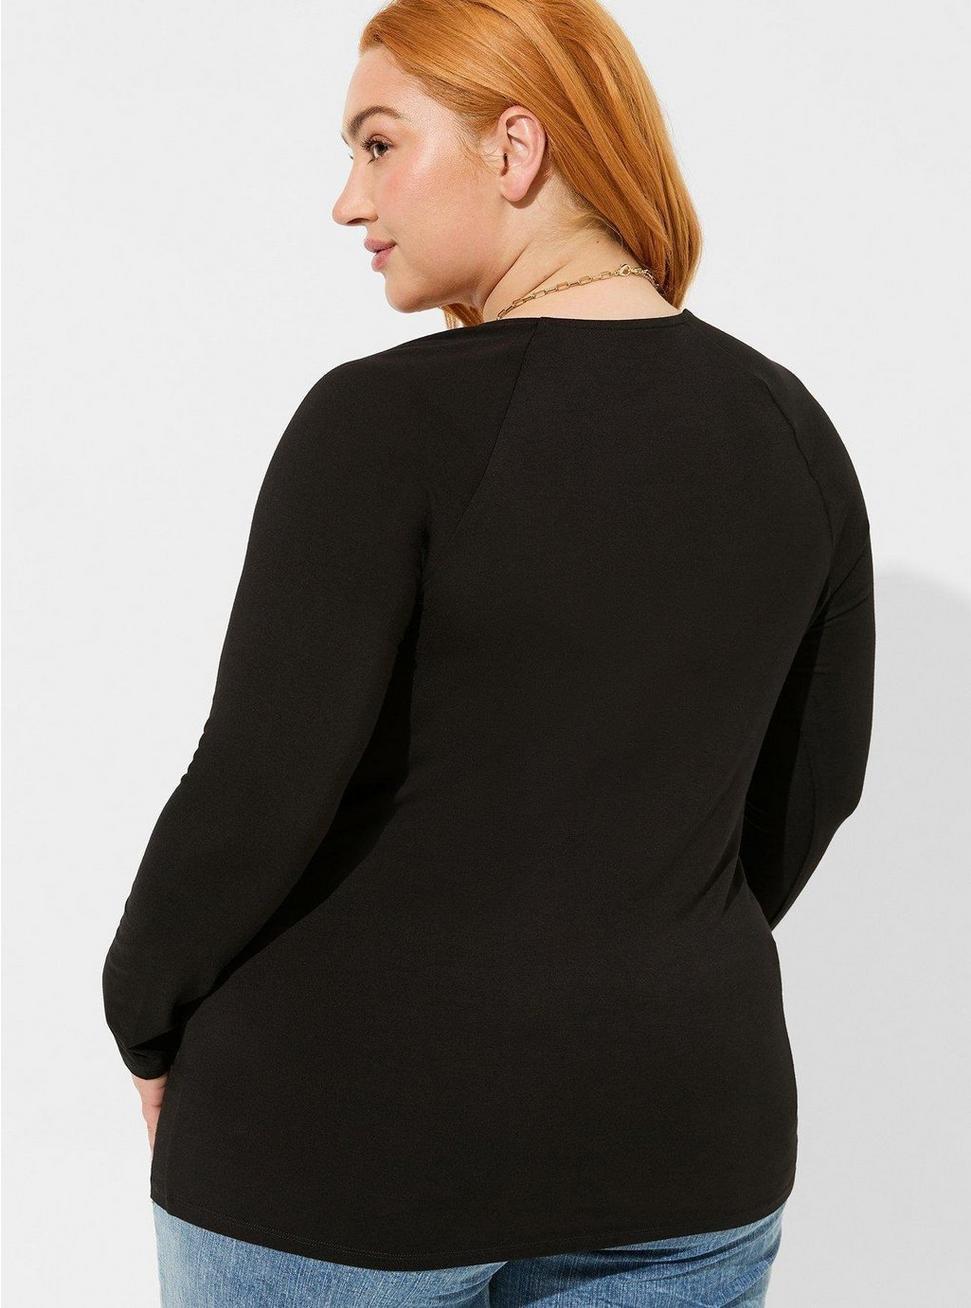 Plus Size Super Soft Lace Inset Long Sleeve Top, DEEP BLACK, alternate